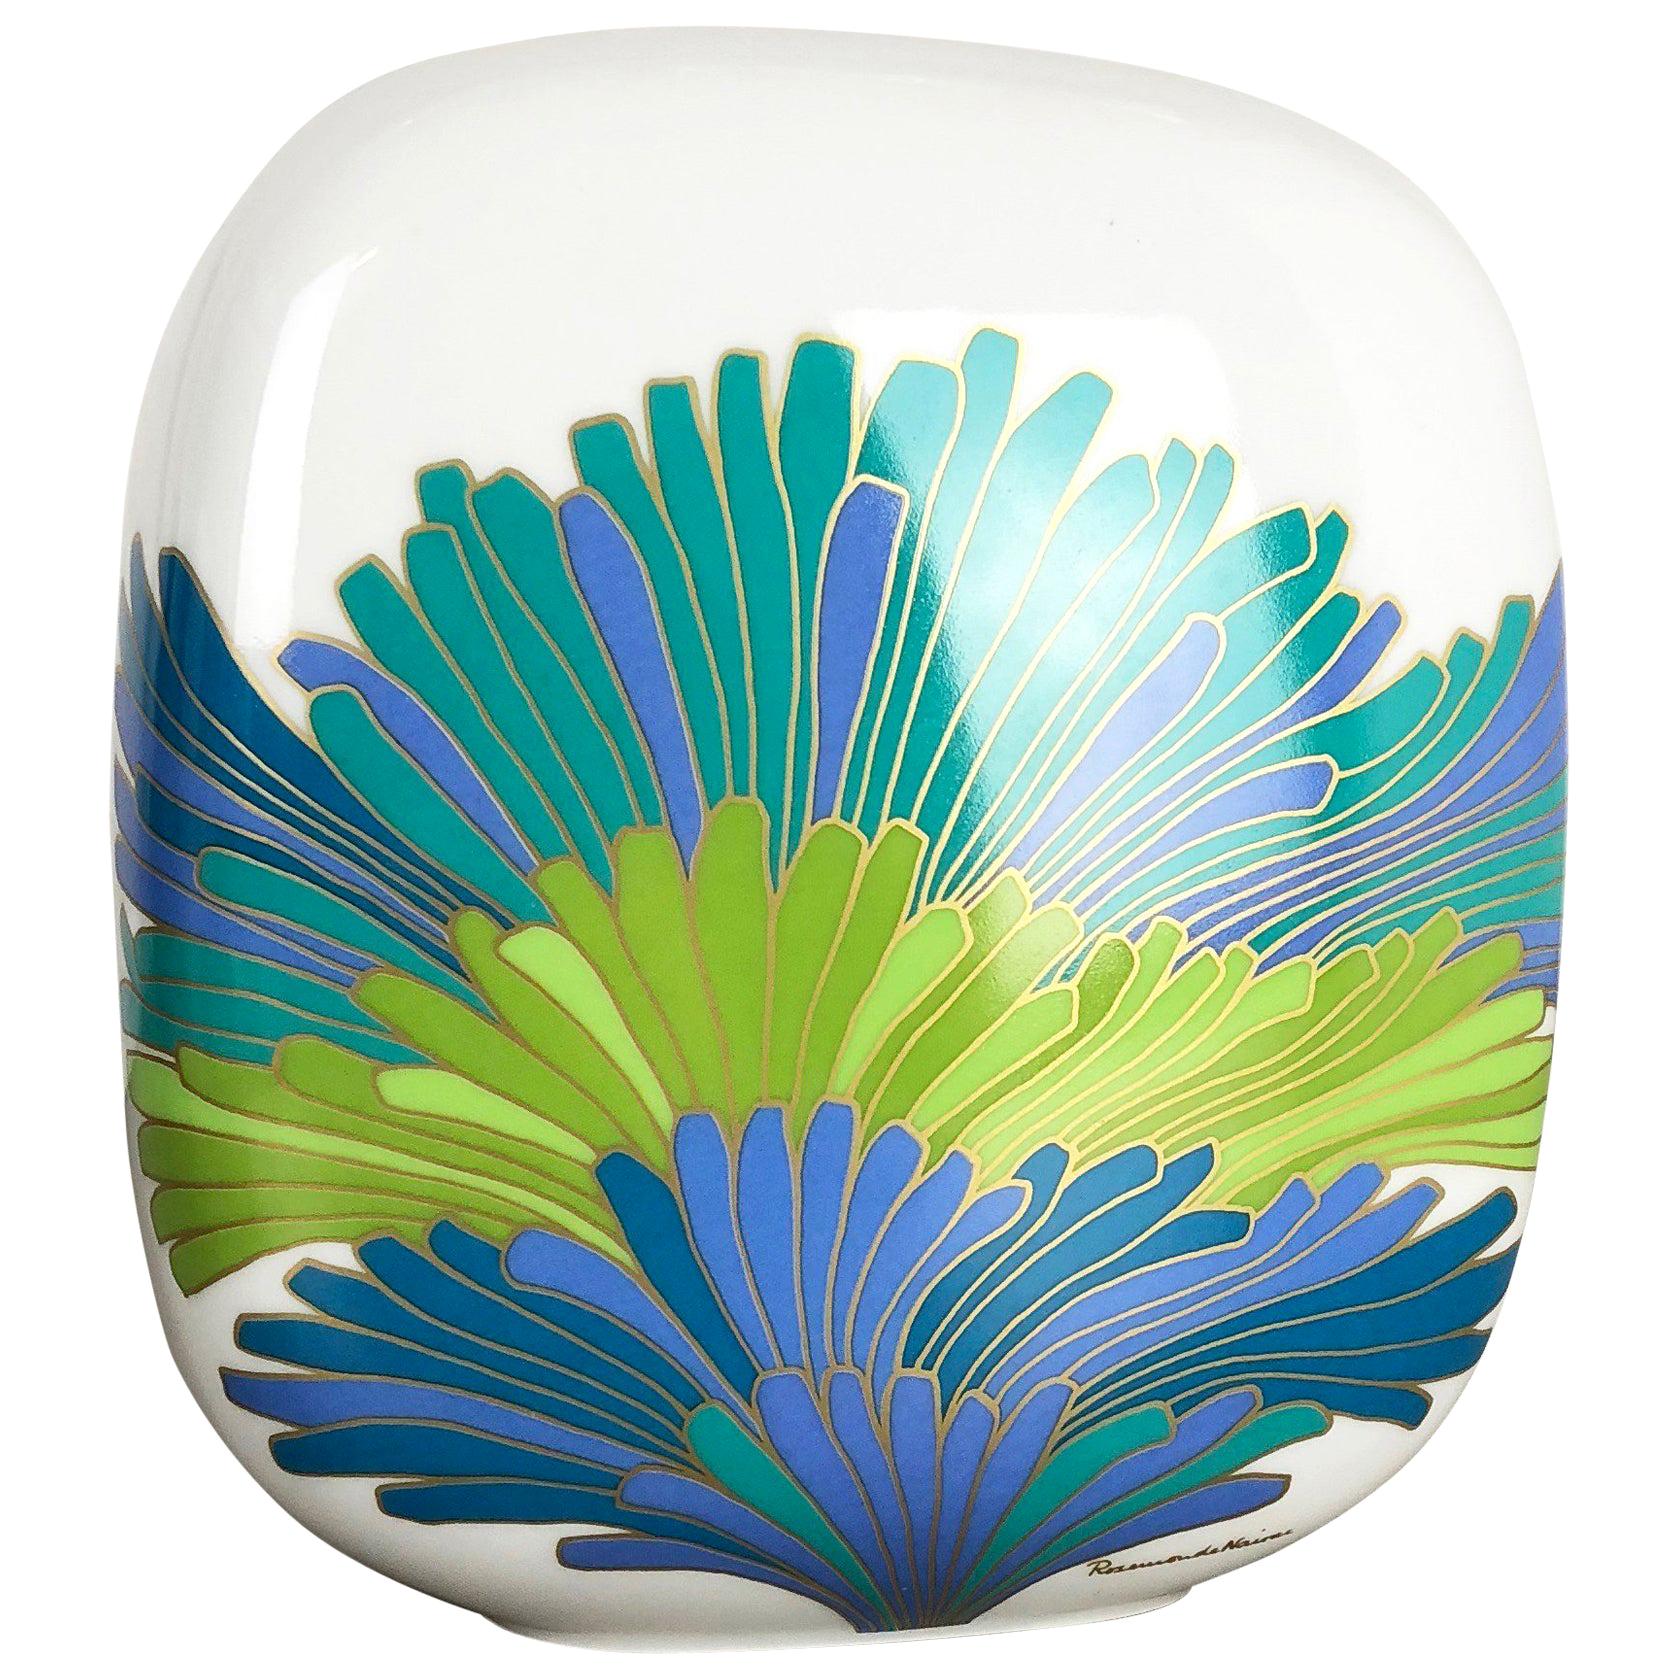 Colorful Art Vase Porcelain Vase by Rosemonde Nairac for Rosenthal Germany 1970s